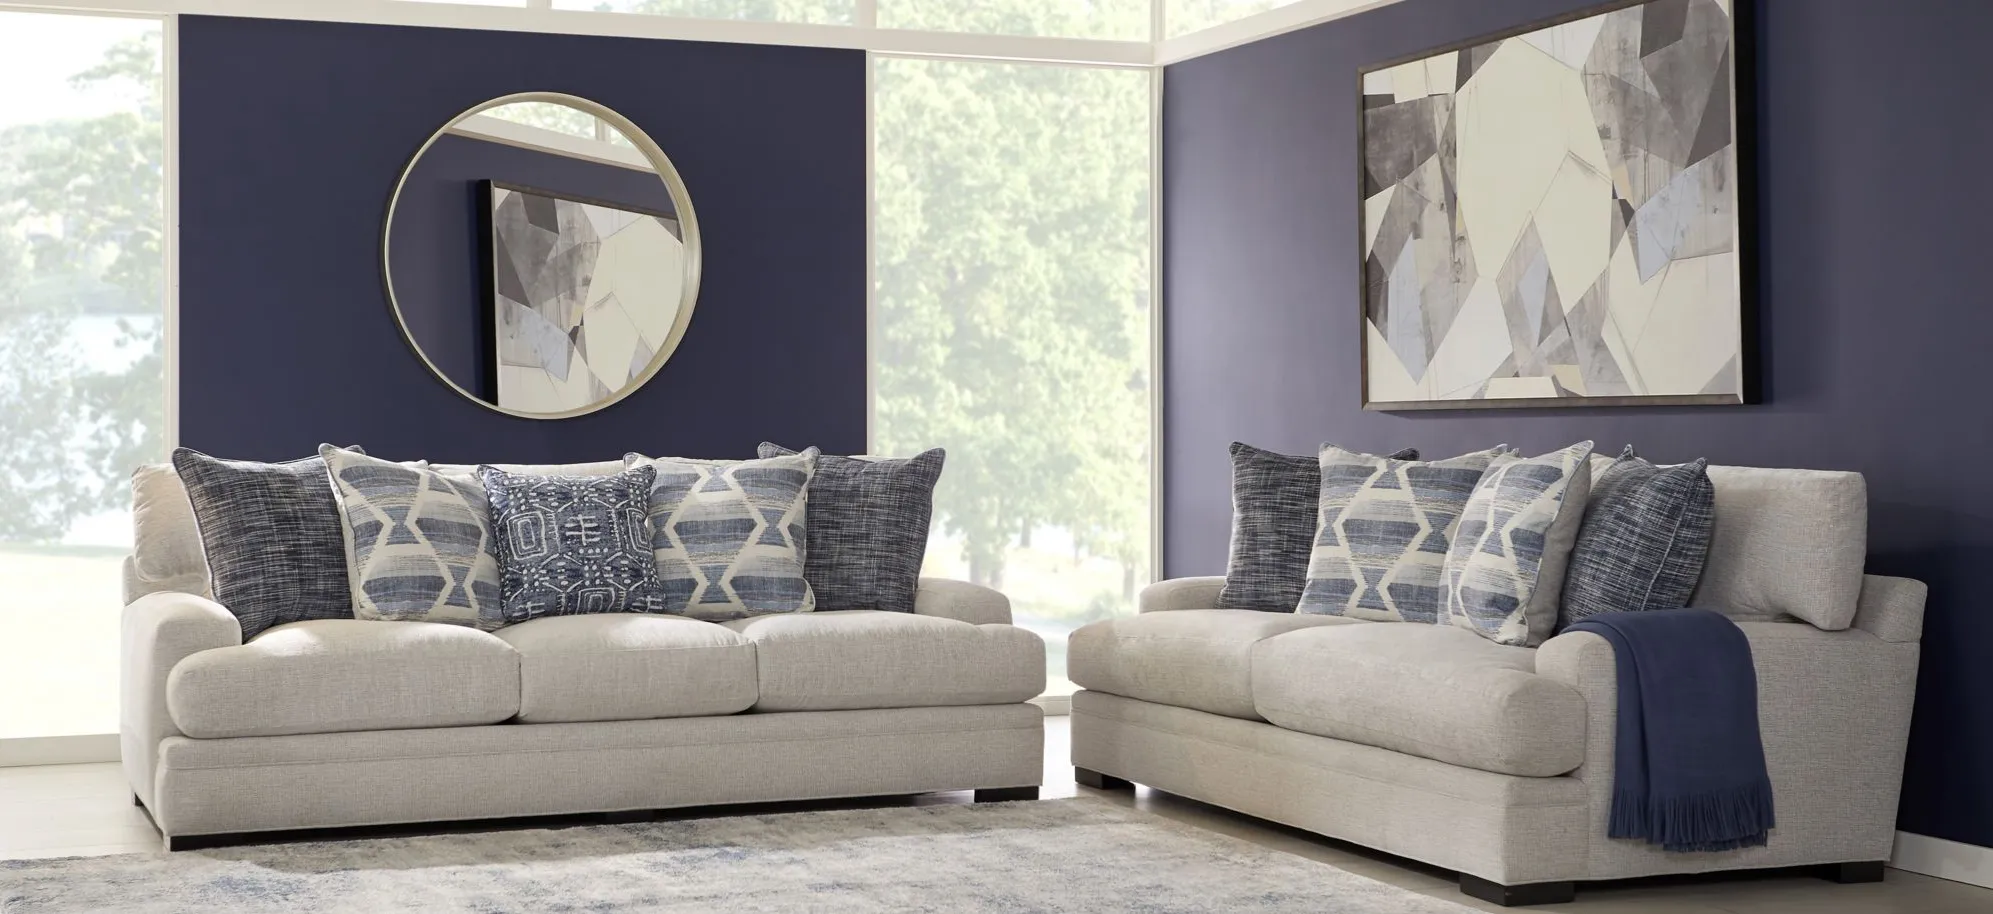 Braelyn 2-pc. Living Room Set in Braxton Ceramic by H.M. Richards